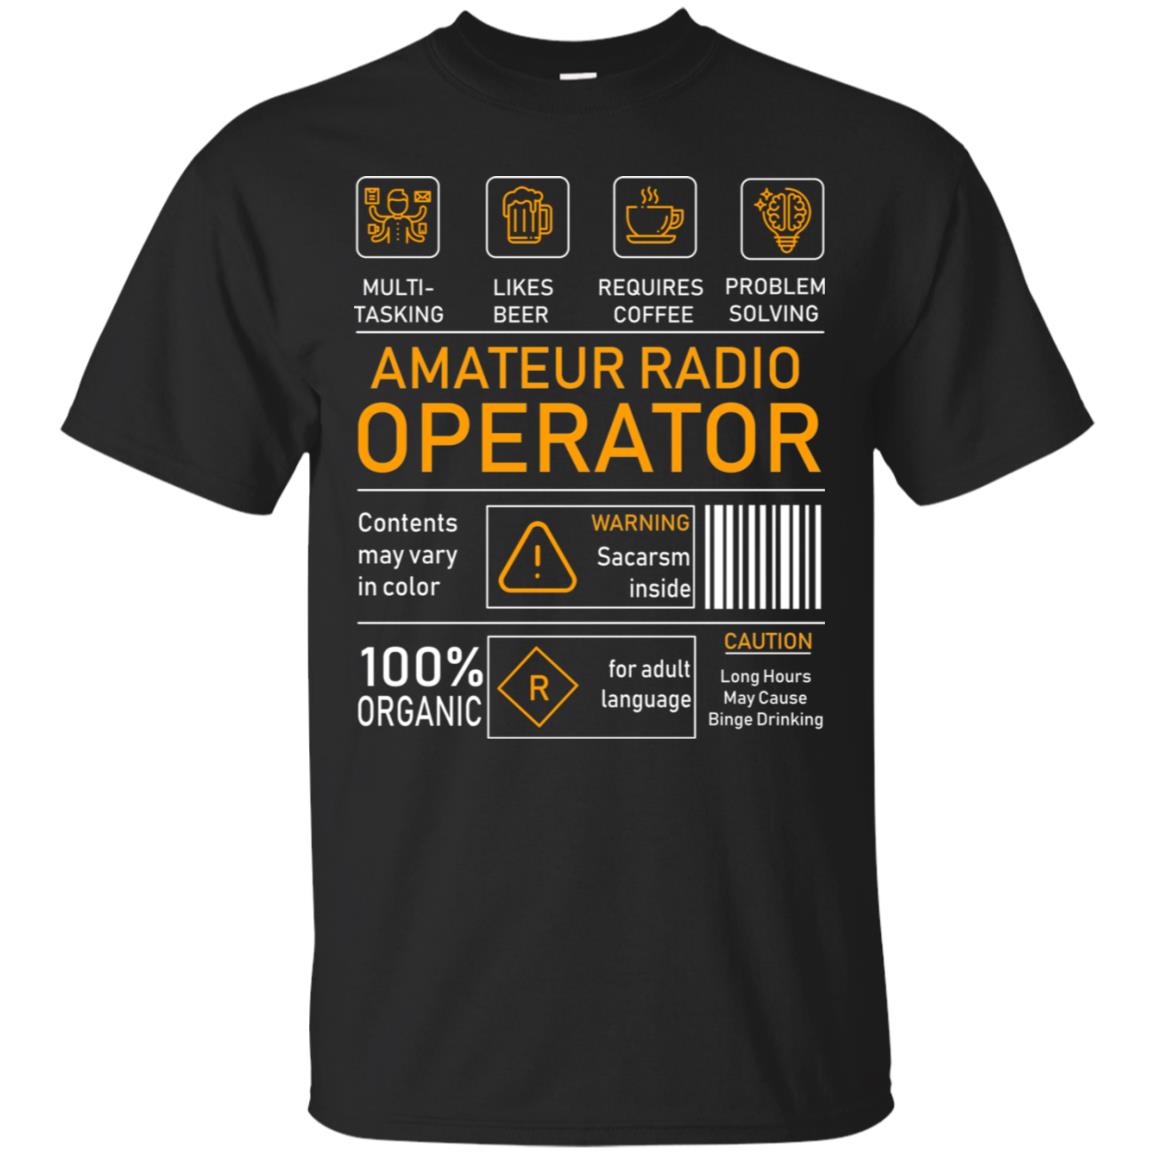 Amateur Radio Operator Gift ShirtG200 Gildan Ultra Cotton T-Shirt